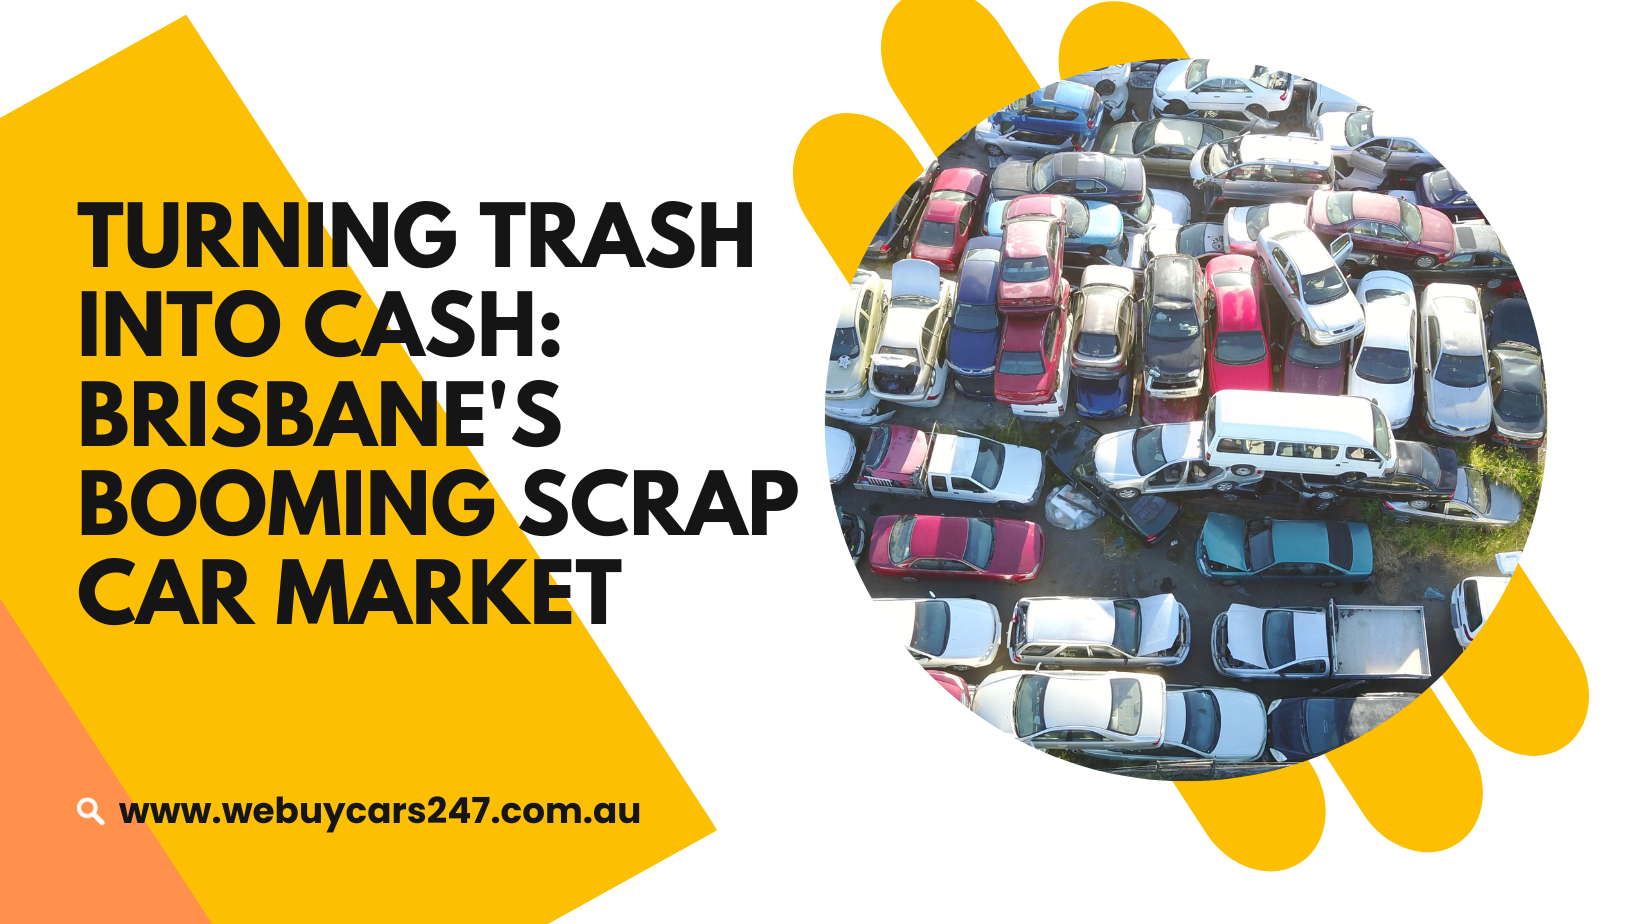 Turning Trash into Cash: Brisbane's Booming Scrap Car Market